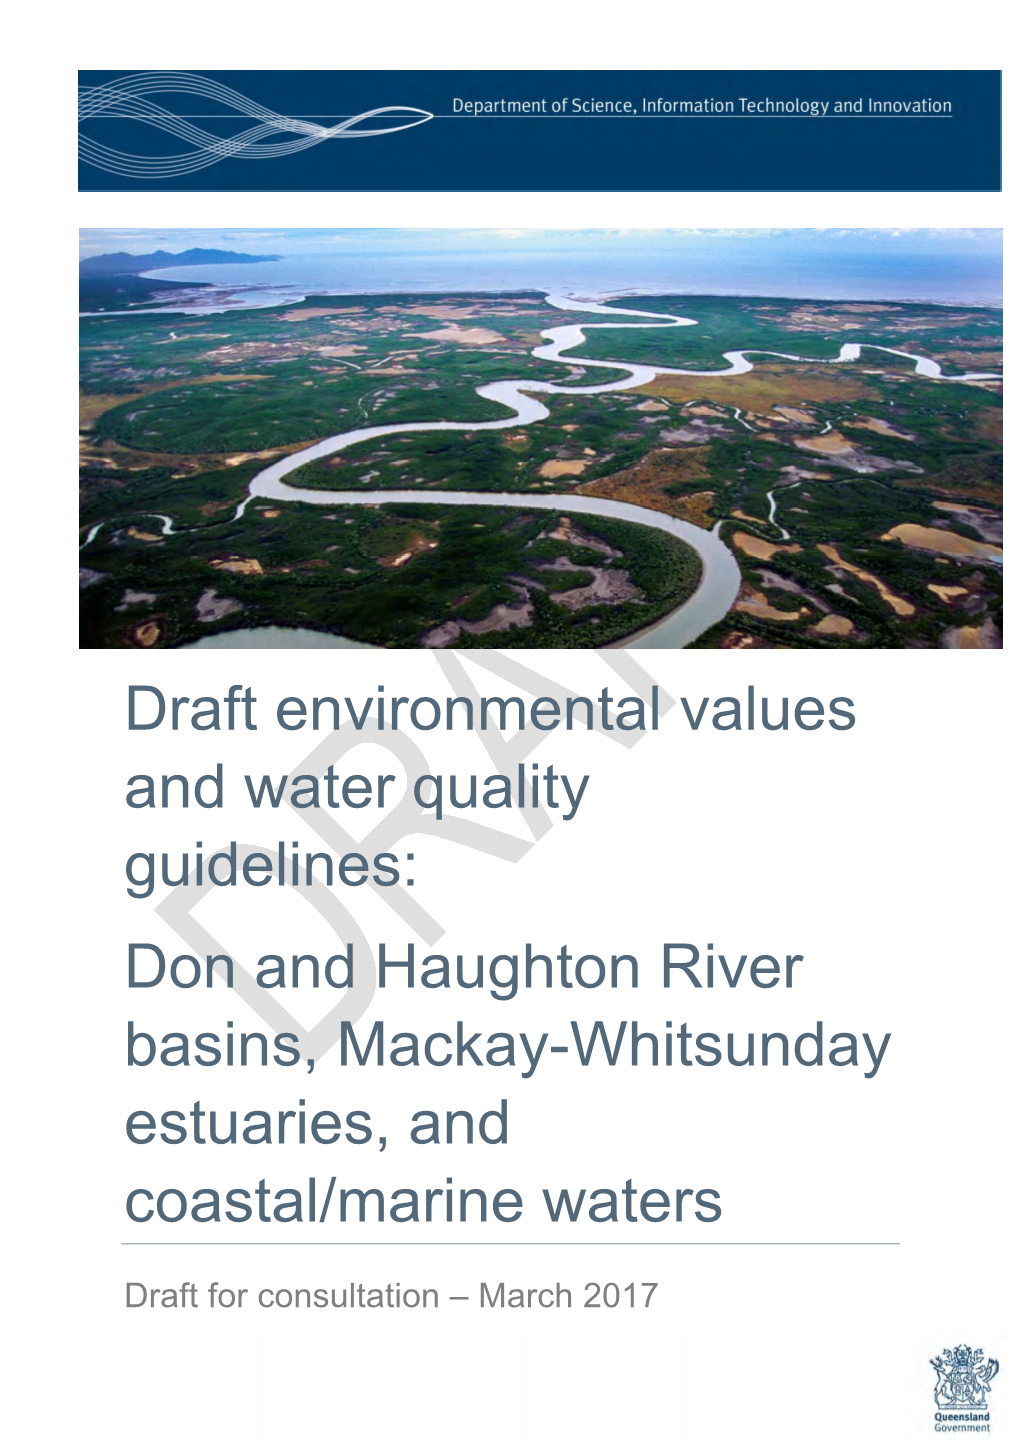 Draft Environmental Values and Water Quality Guidelines: Don and Haughton River Basins, Mackay-Whitsunday Estuaries, and Coastal/Marine Waters